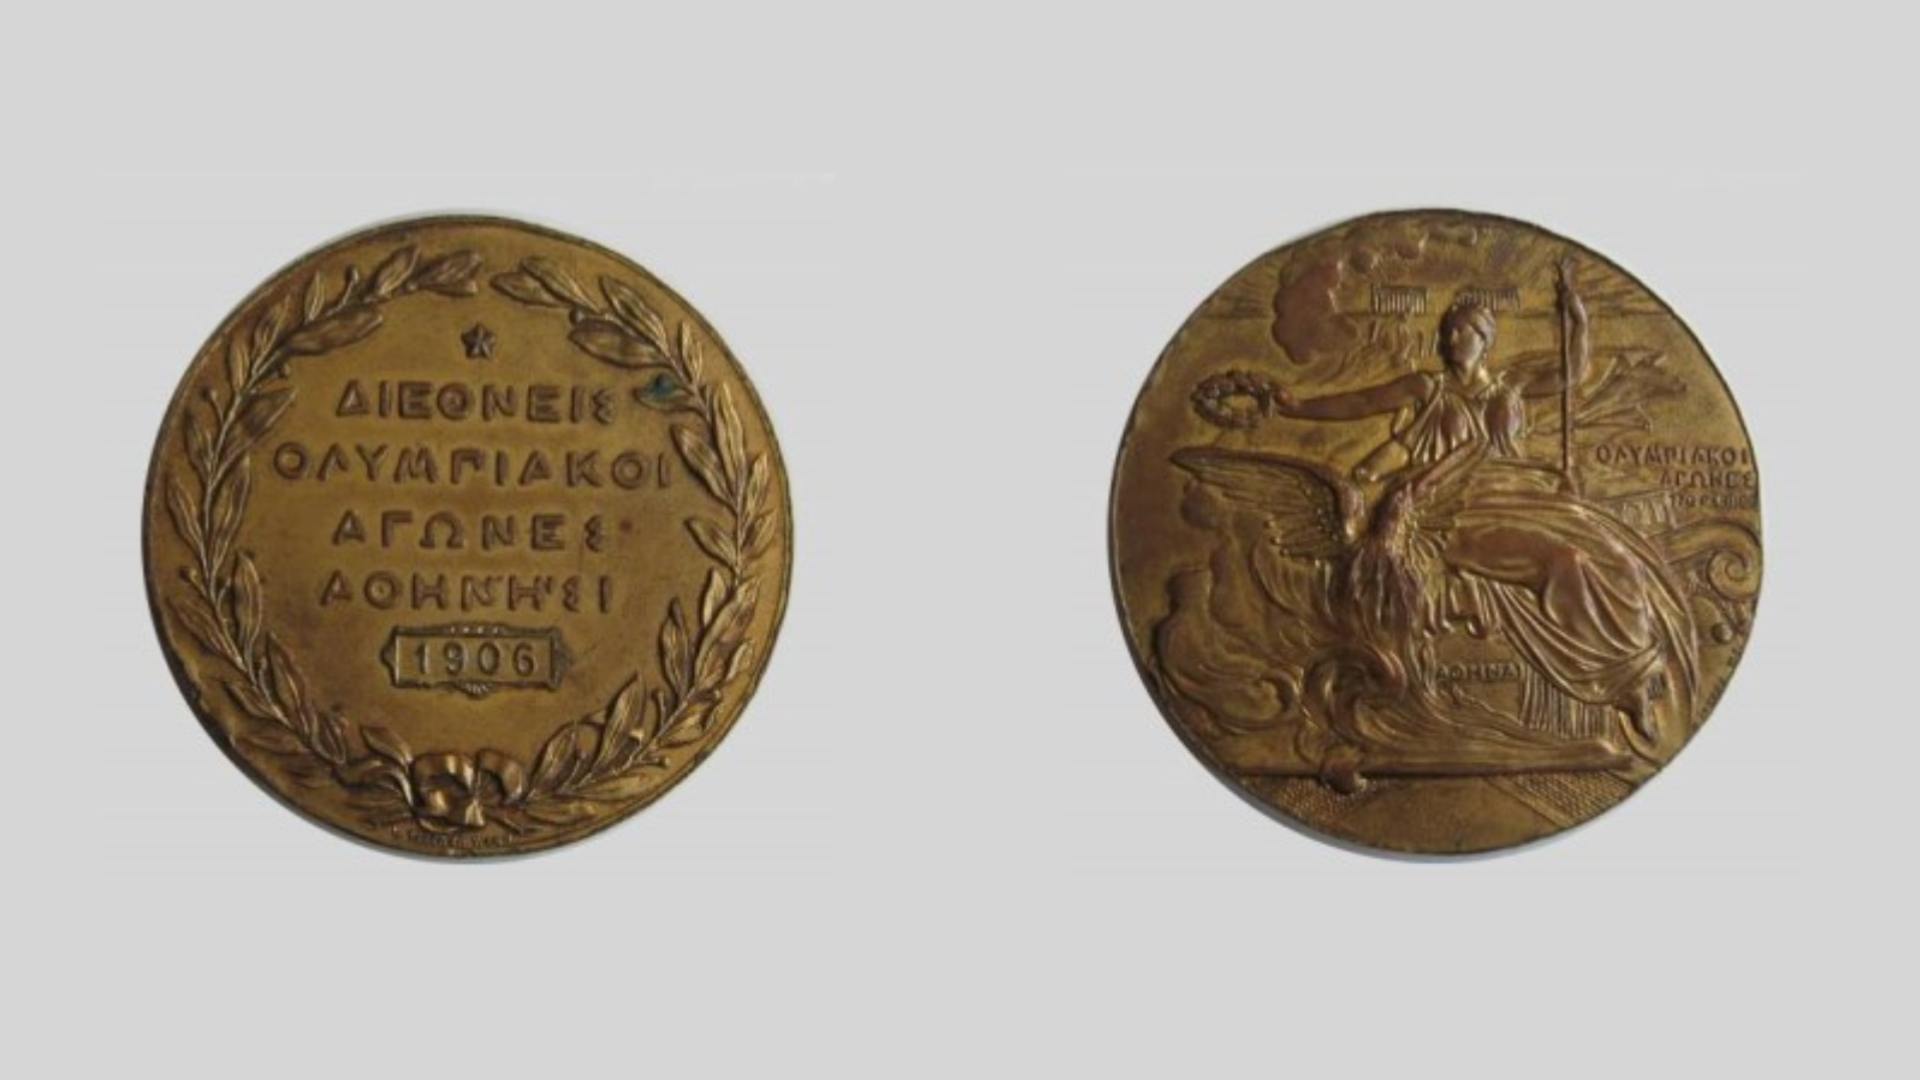 Participation medals |1906 Athens Games